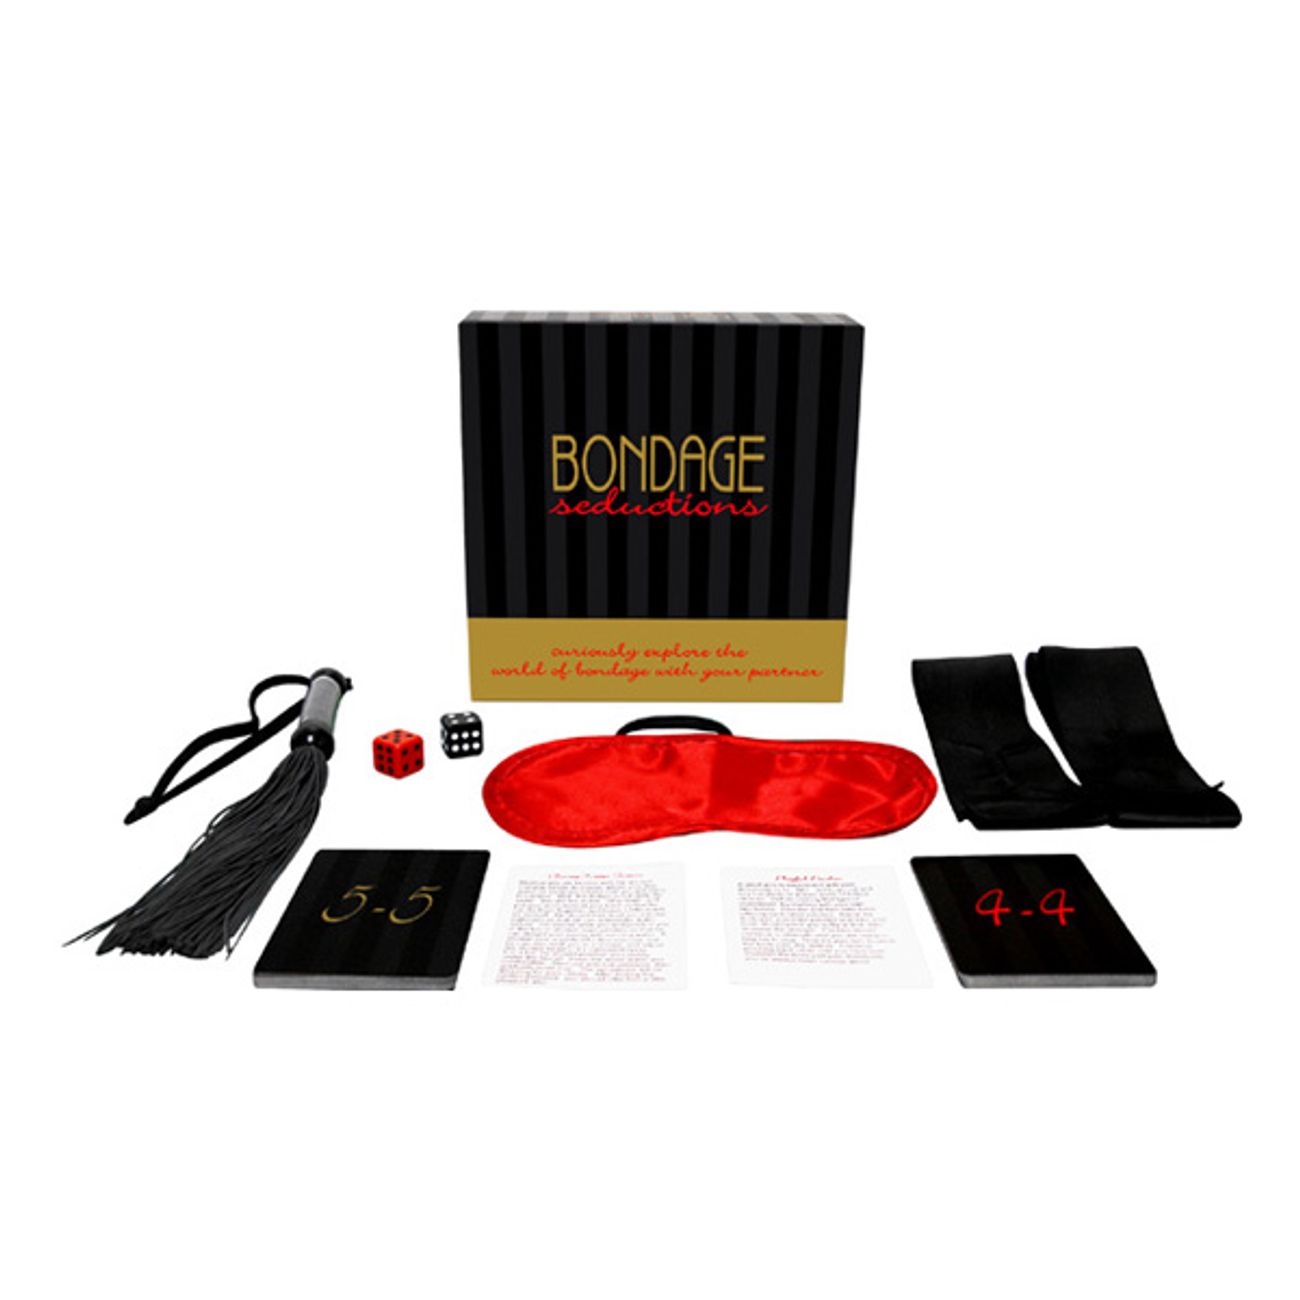 bondage-seductions-game-1